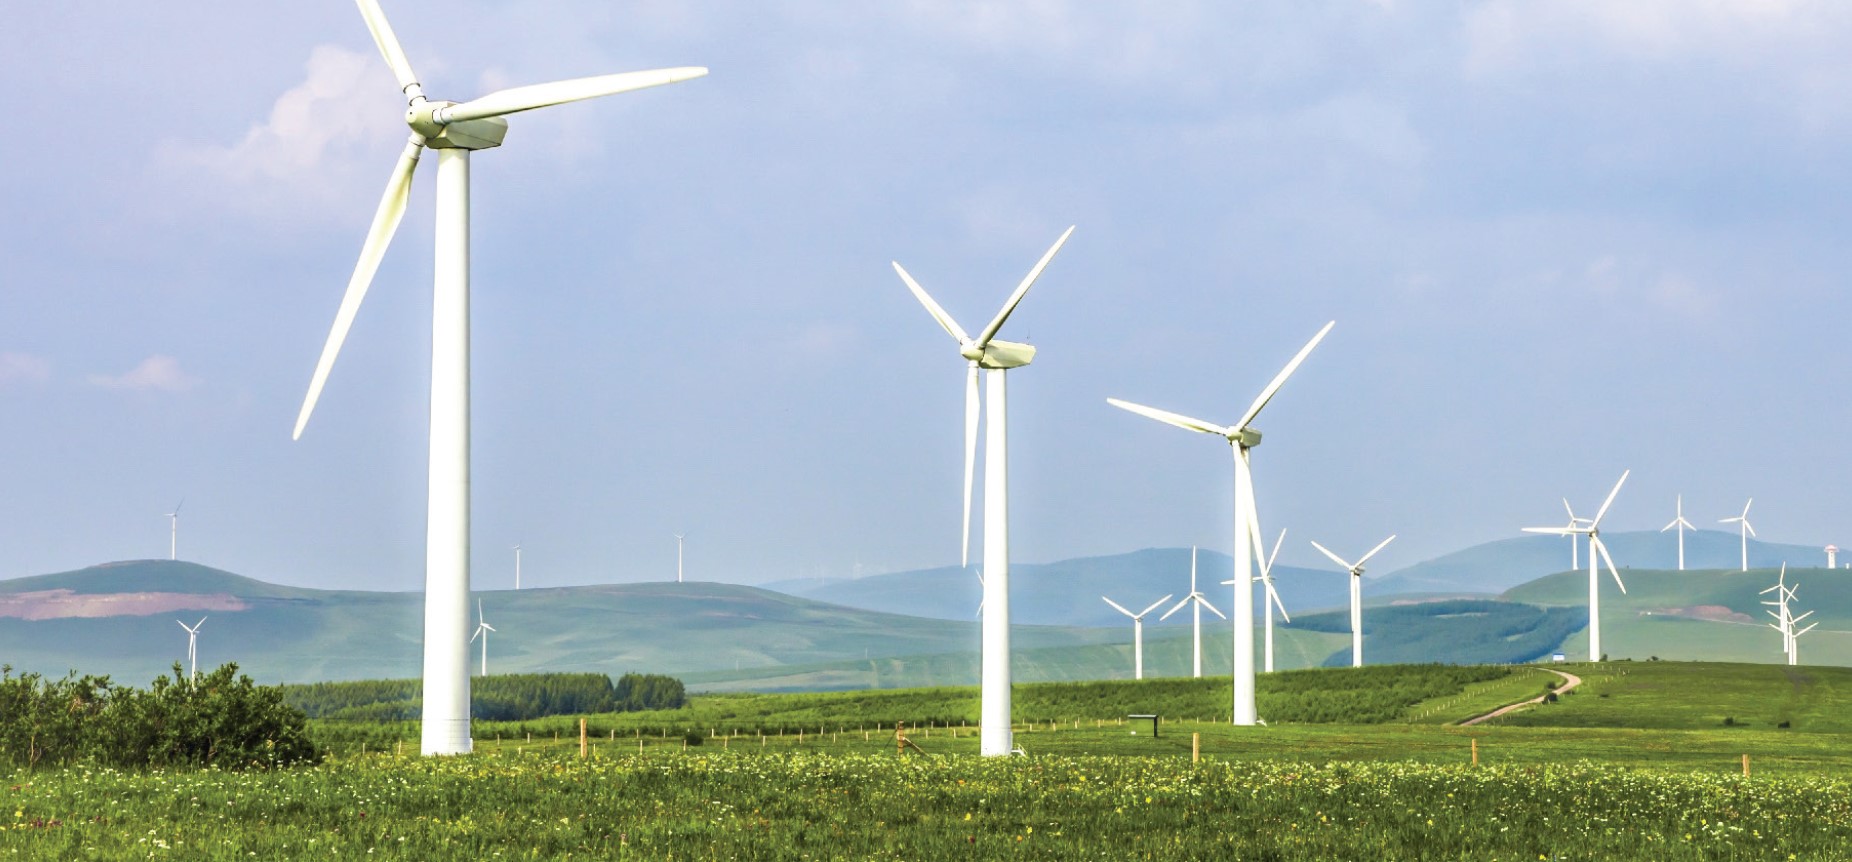 Wind turbine gears benefit from NUFLUX™ technology – Part 2